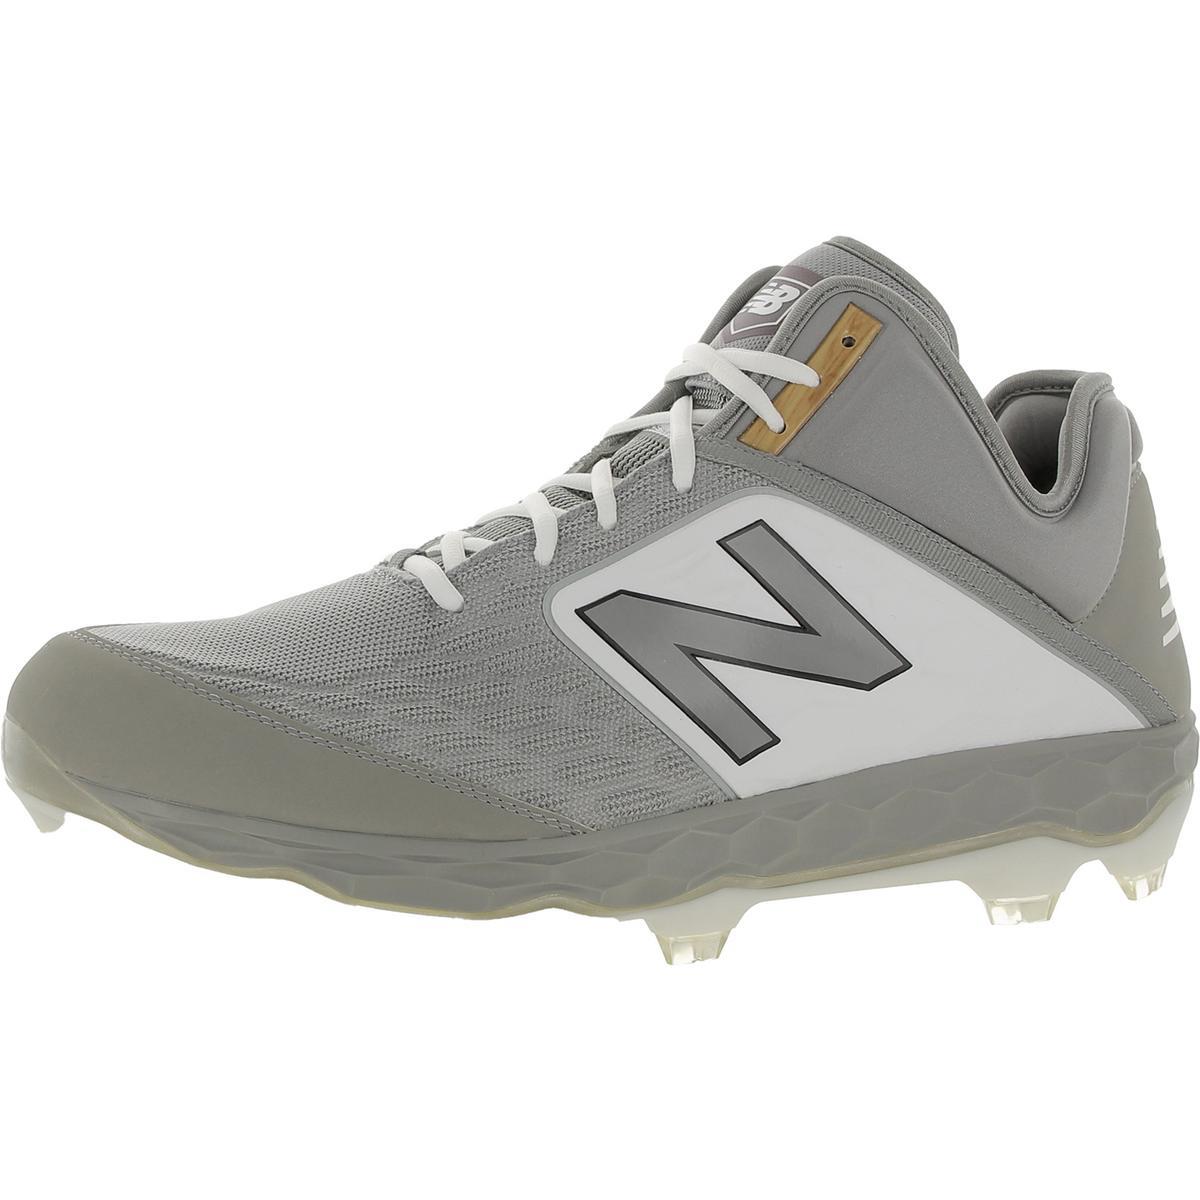 New Balance Mens Baseball Sports Trainers Cleats Sneakers Bhfo 5354 Gray